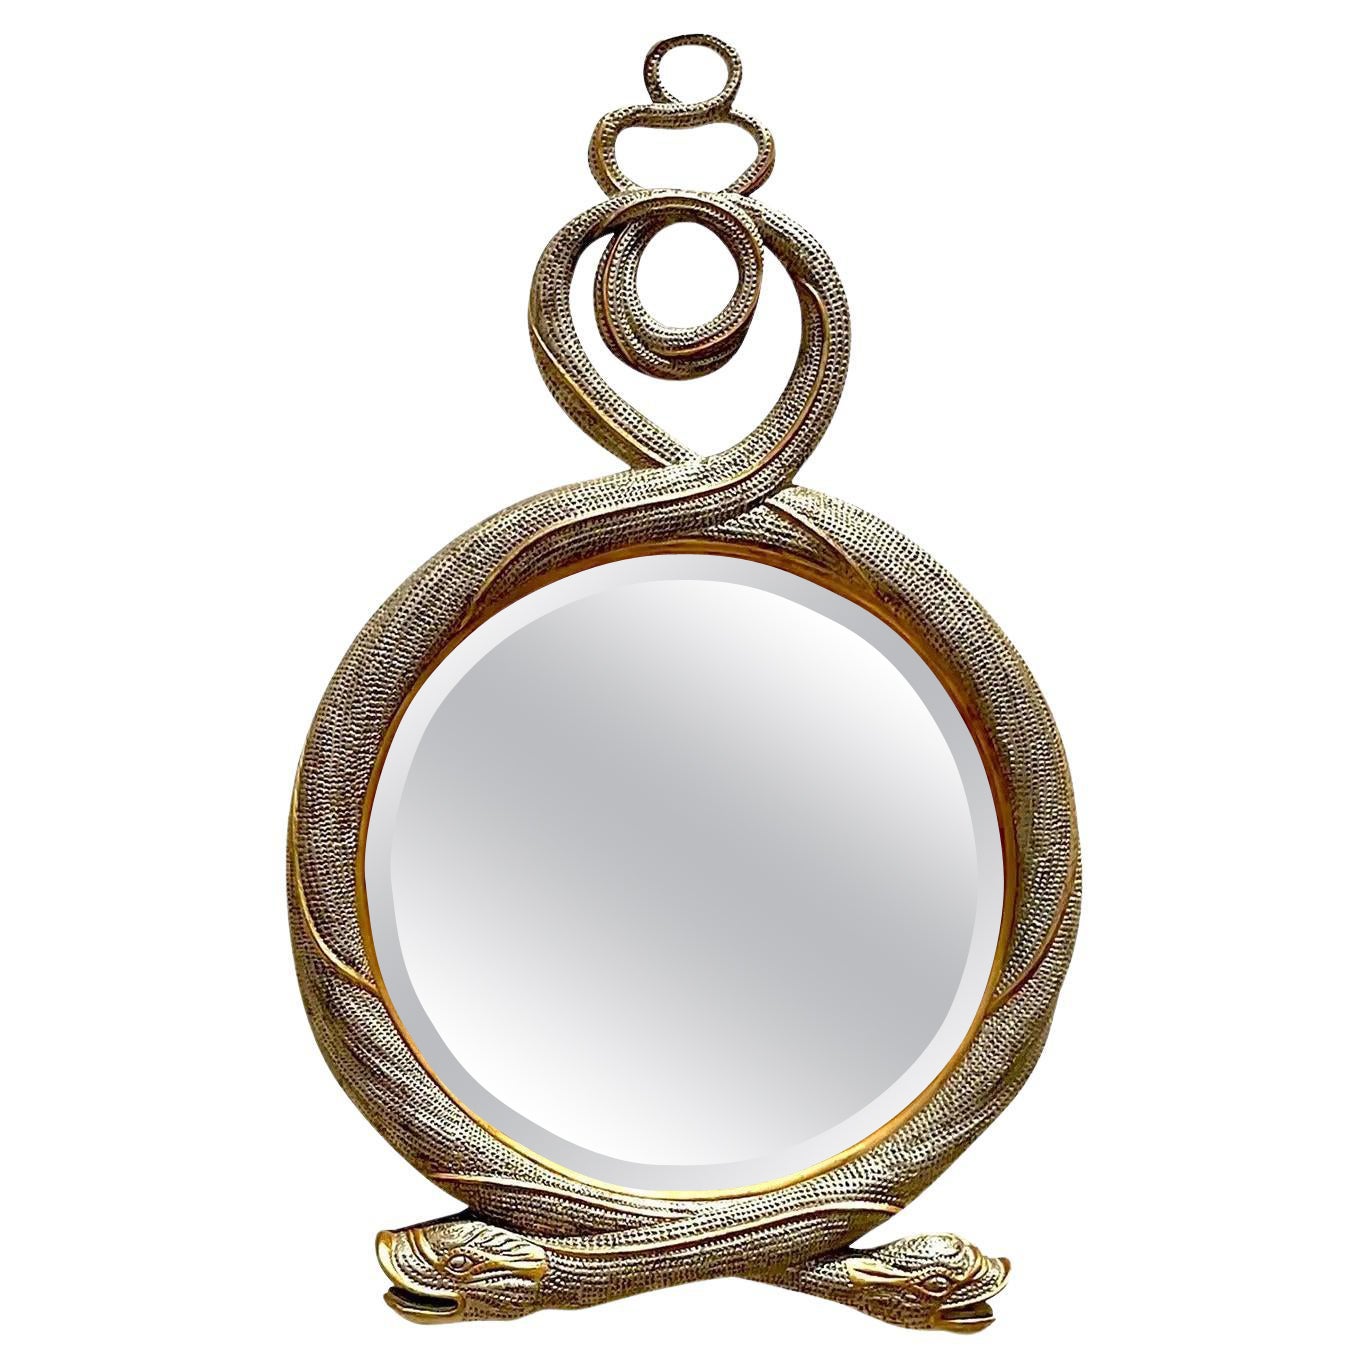 Vintage Regency Maitland Smith Gilt Twisted Serpent Mirror